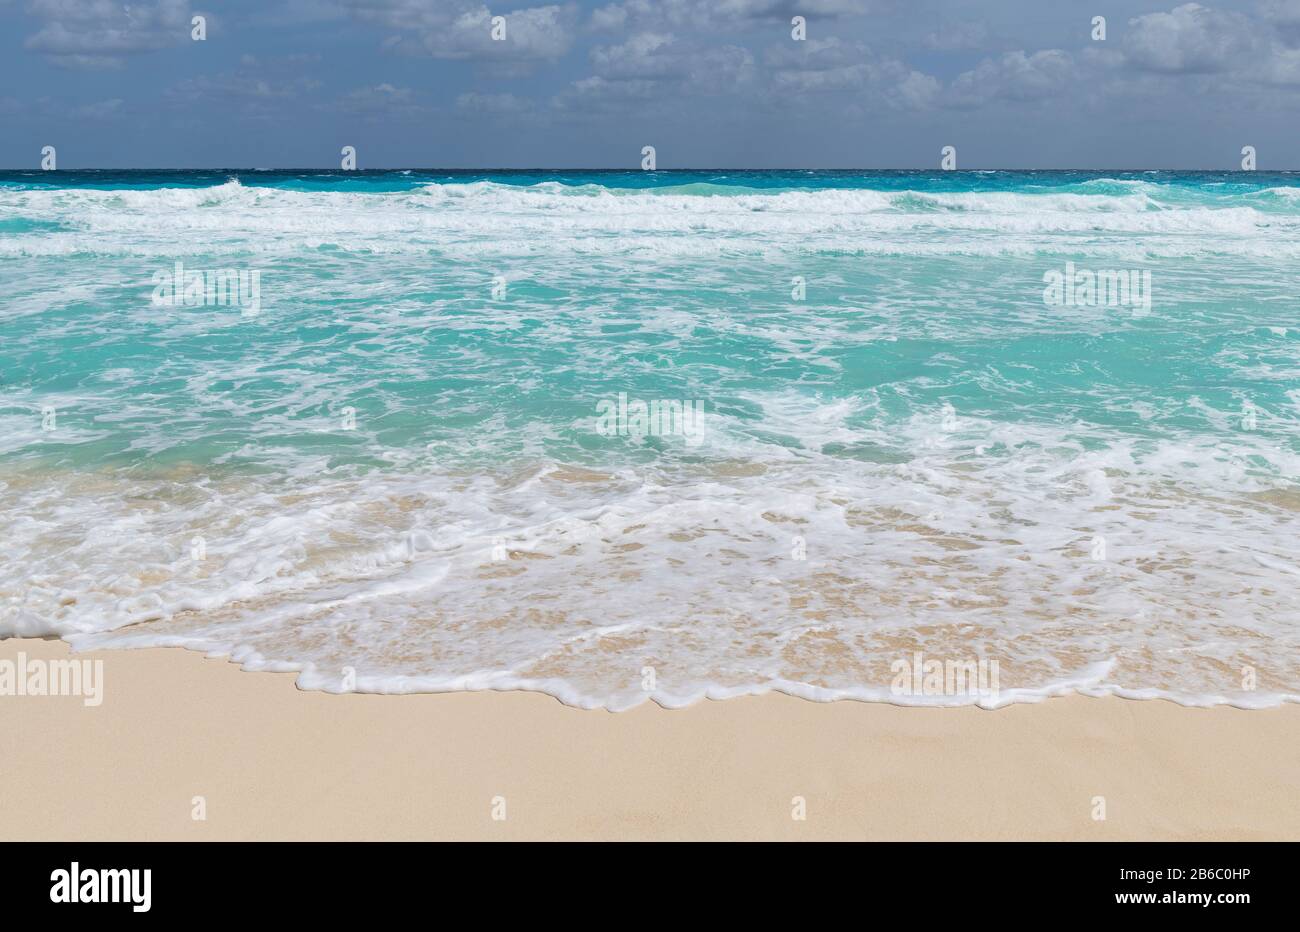 Das durchsichtige türkisfarbene Wasser des Delfinstrands oder der Playa Delfin am karibischen Meer in Cancun, Yucatan-Halbinsel, Quintana Roo Staat, Mexiko. Stockfoto